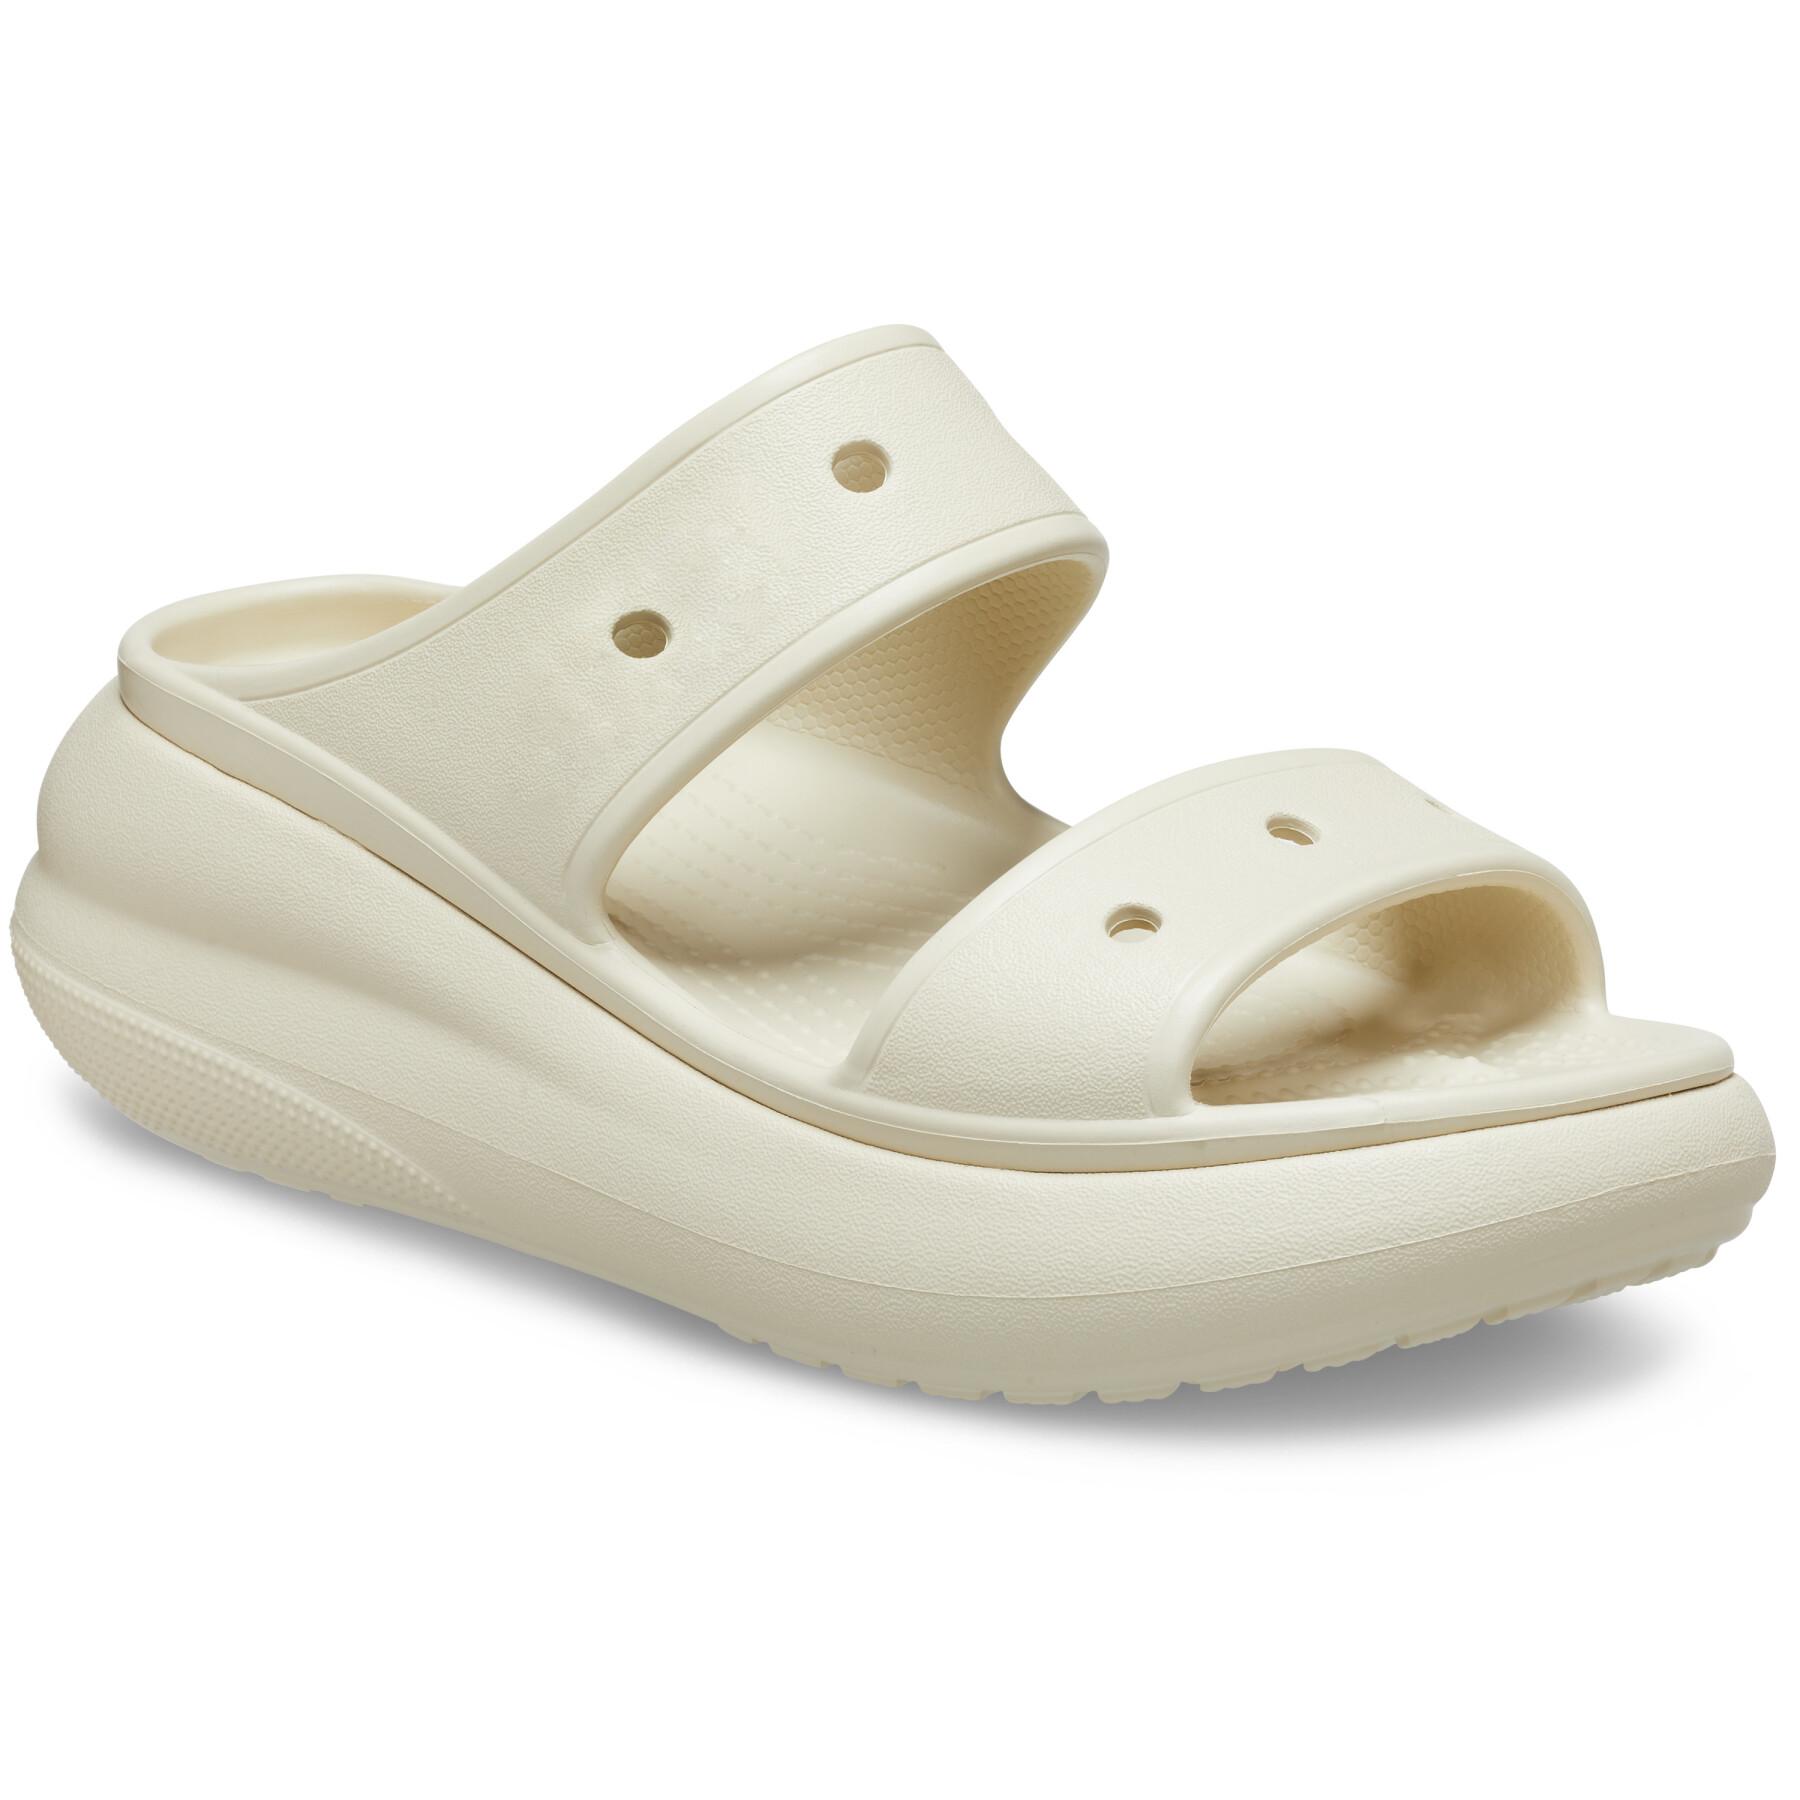 Children's sandals Crocs Crush